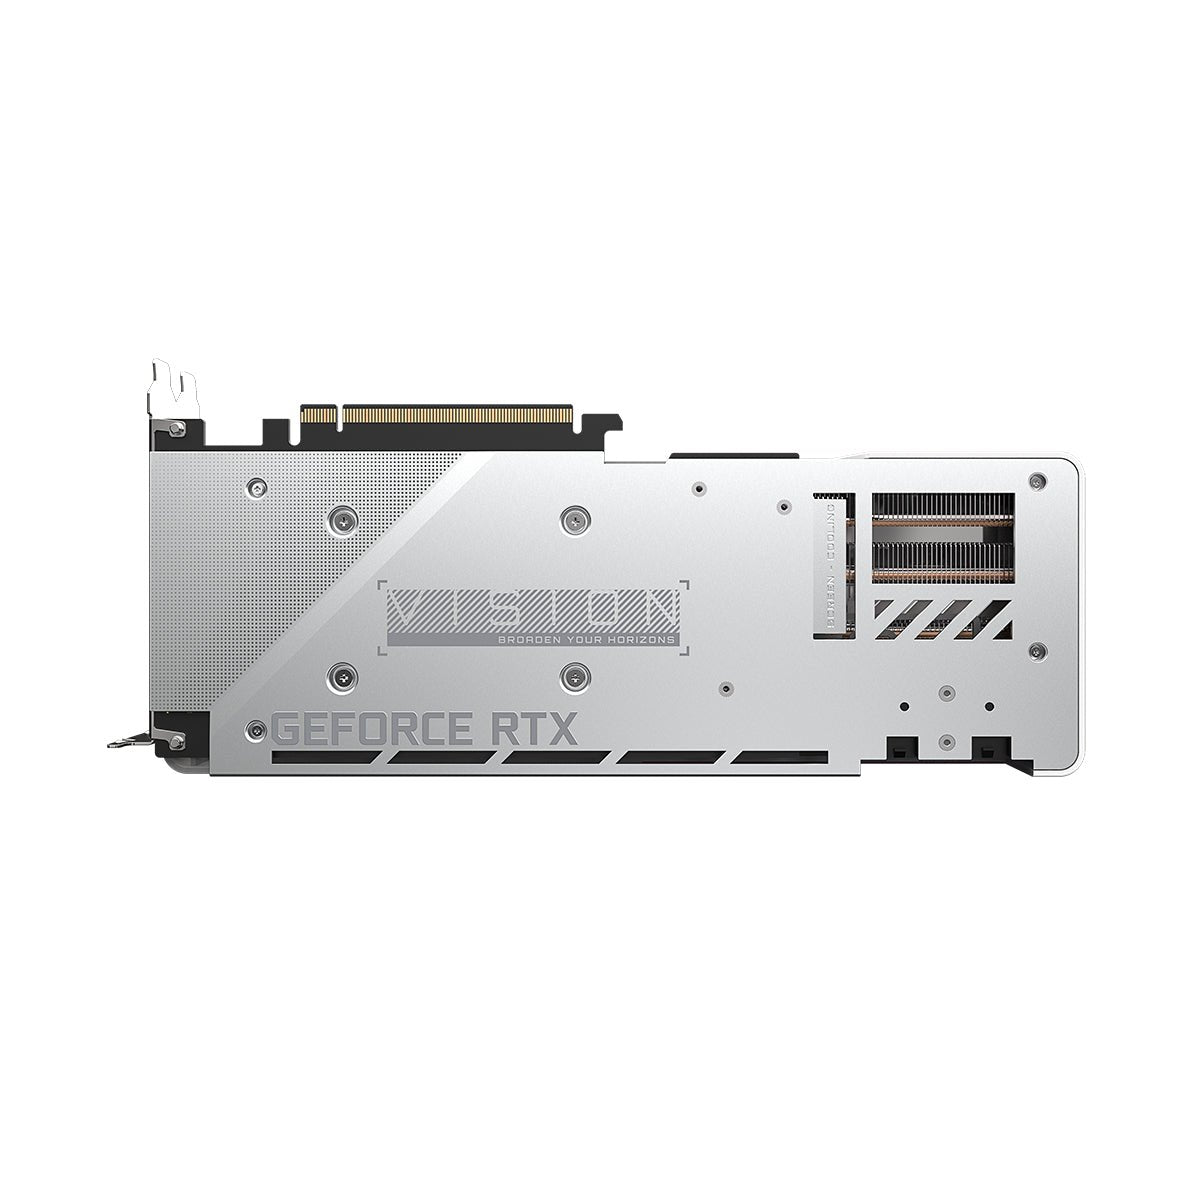 Gigabyte GeForce RTX 3070 VISION OC 8G Graphics Card - Store 974 | ستور ٩٧٤